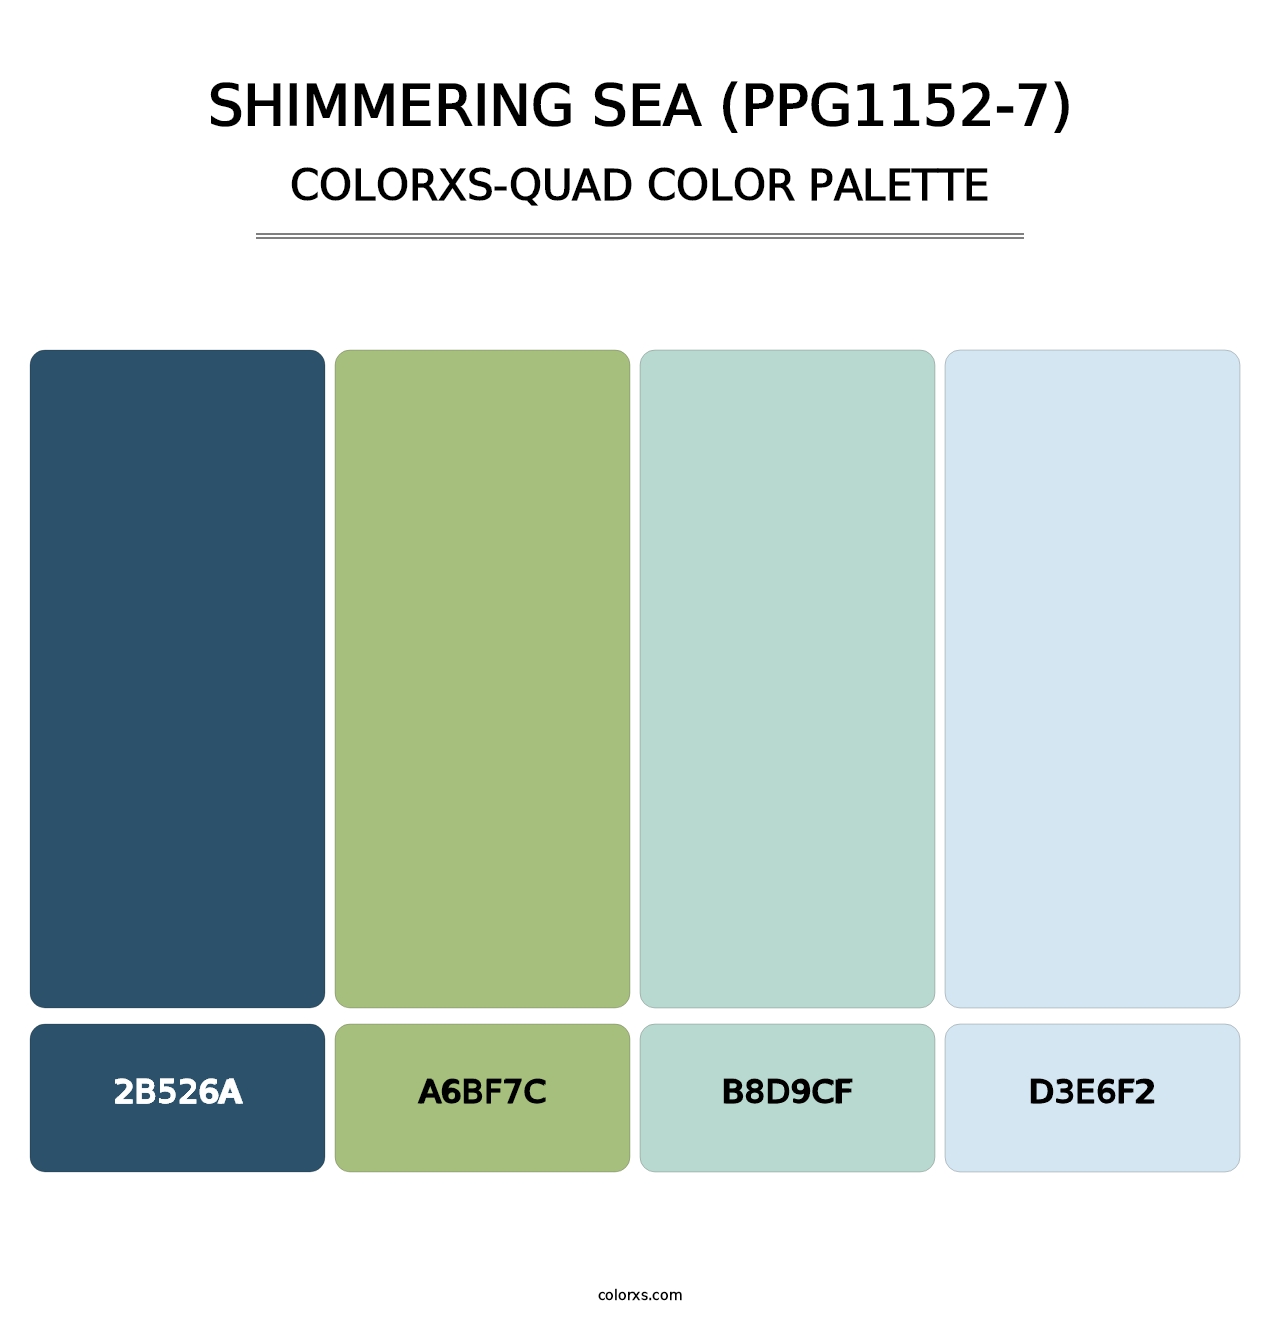 Shimmering Sea (PPG1152-7) - Colorxs Quad Palette